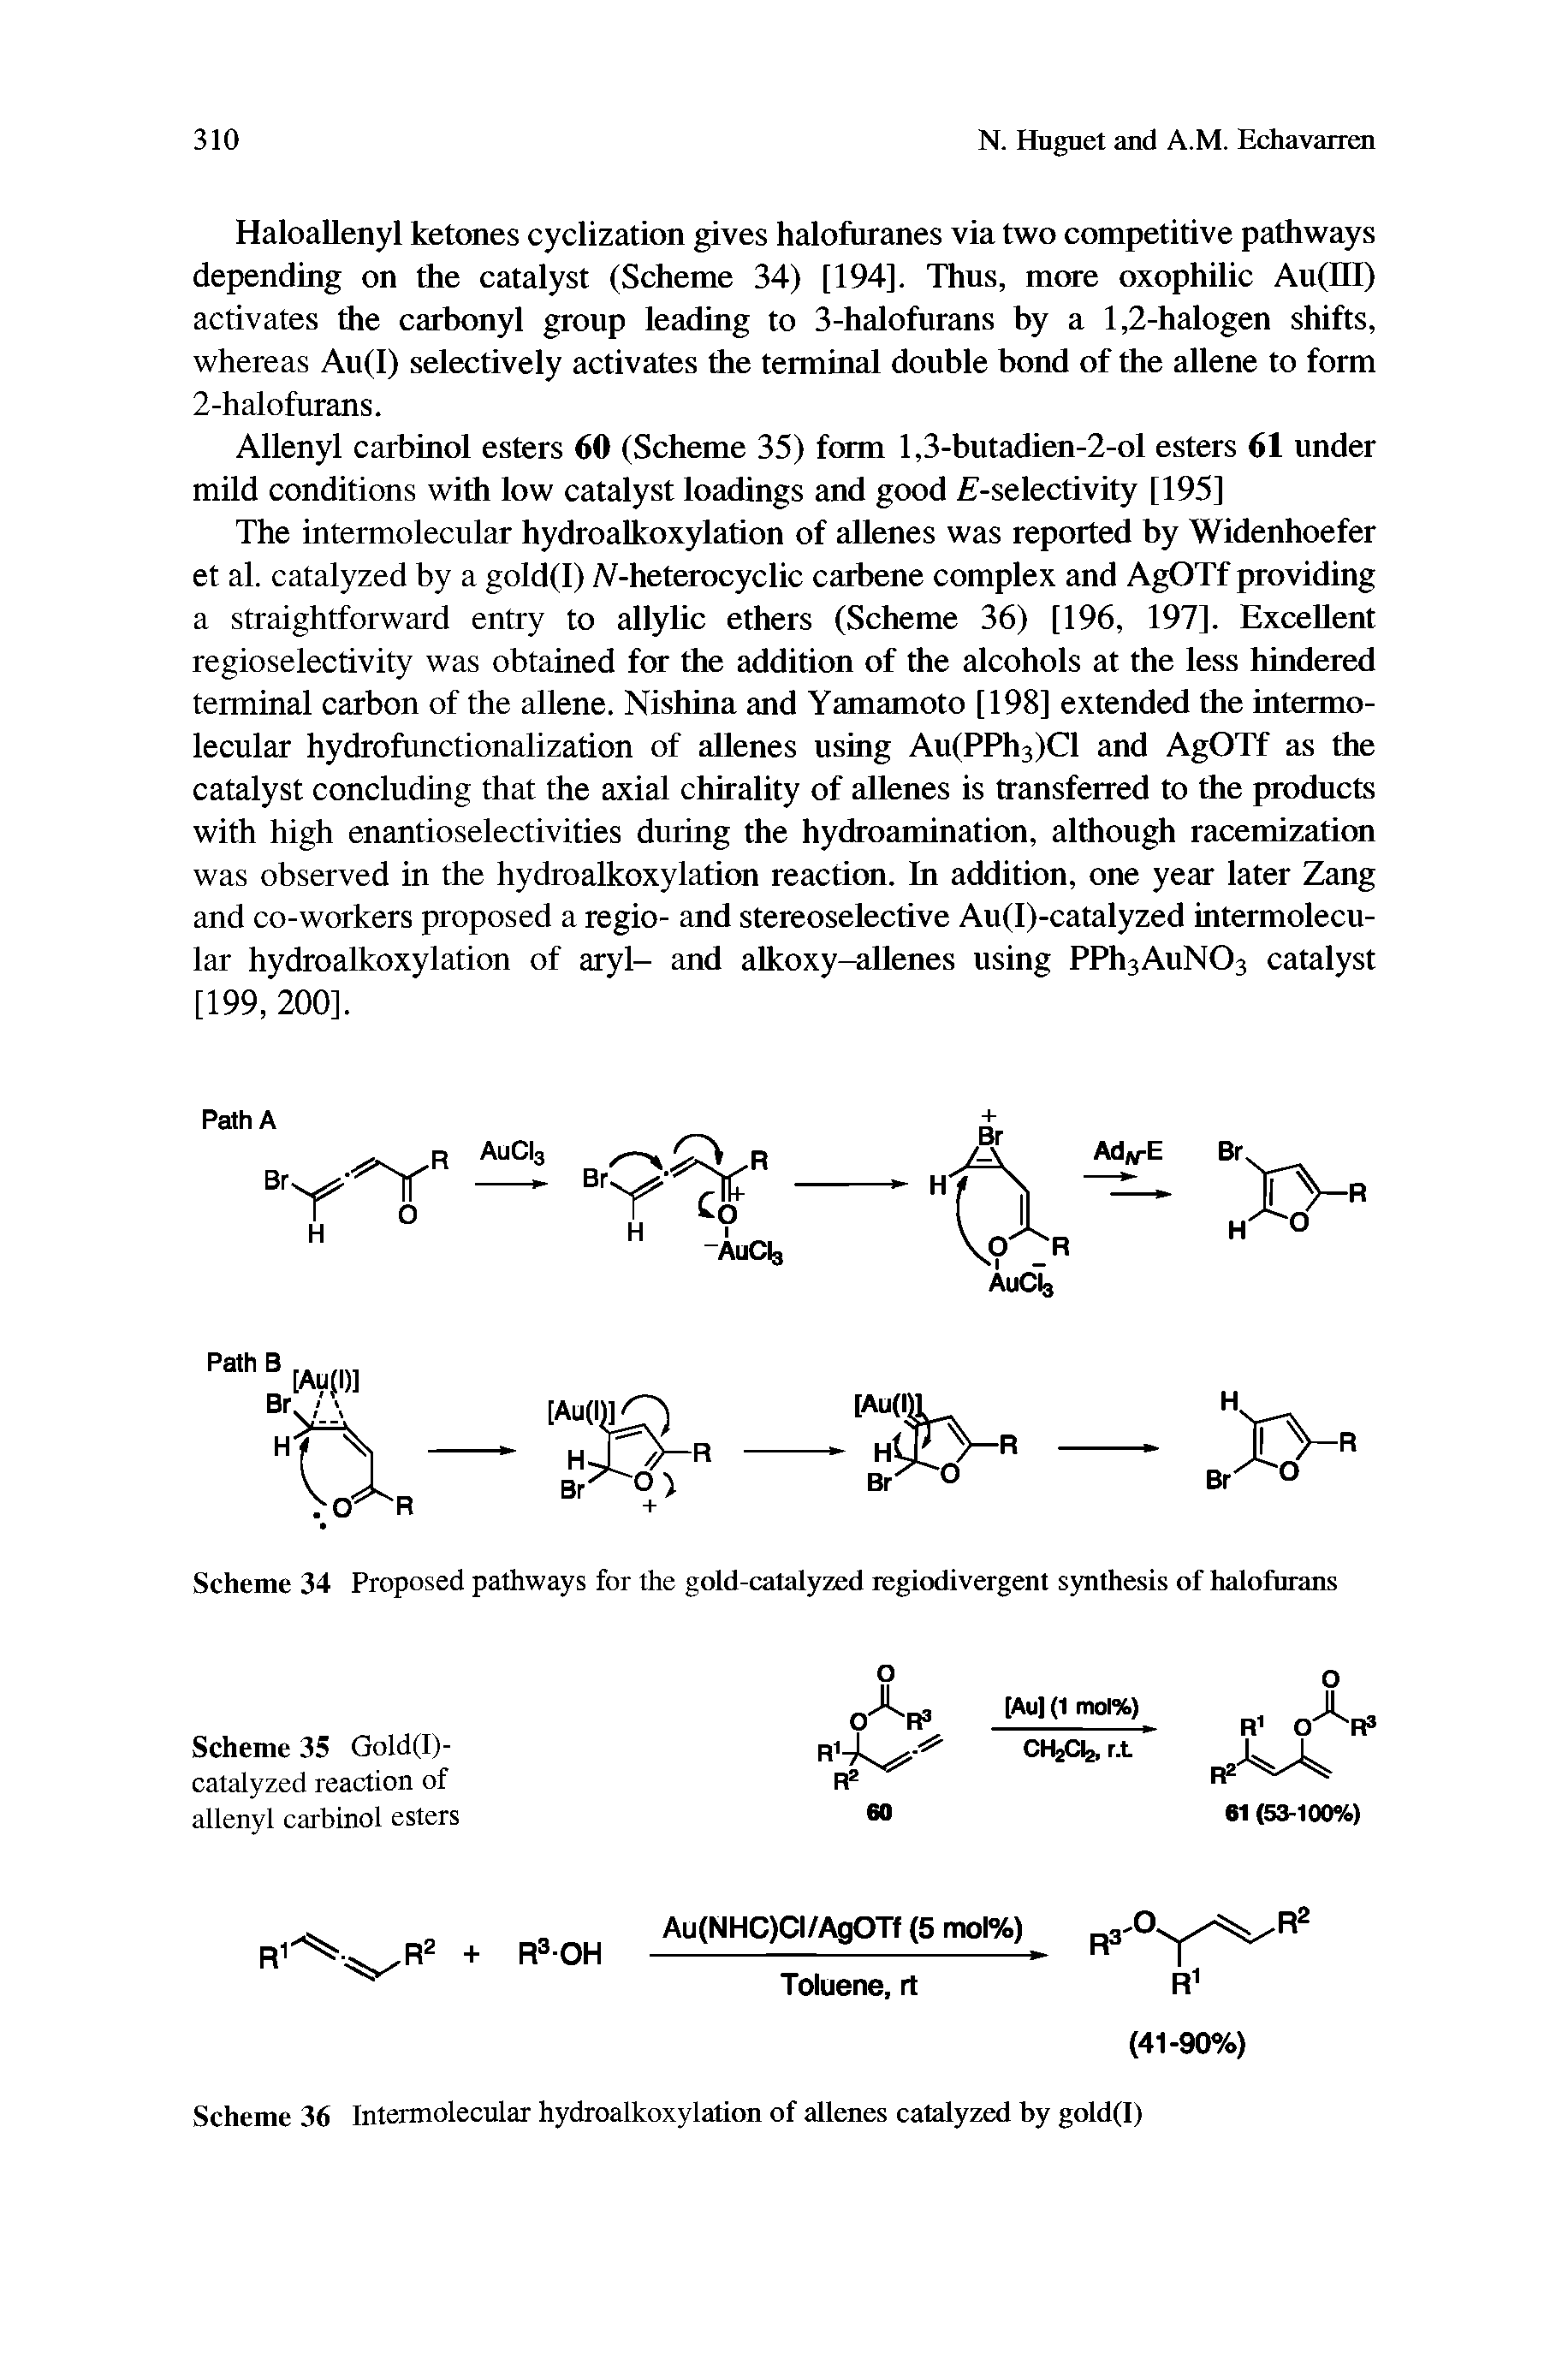 Scheme 35 Gold(l)-catalyzed reaction of allenyl carbinol esters...